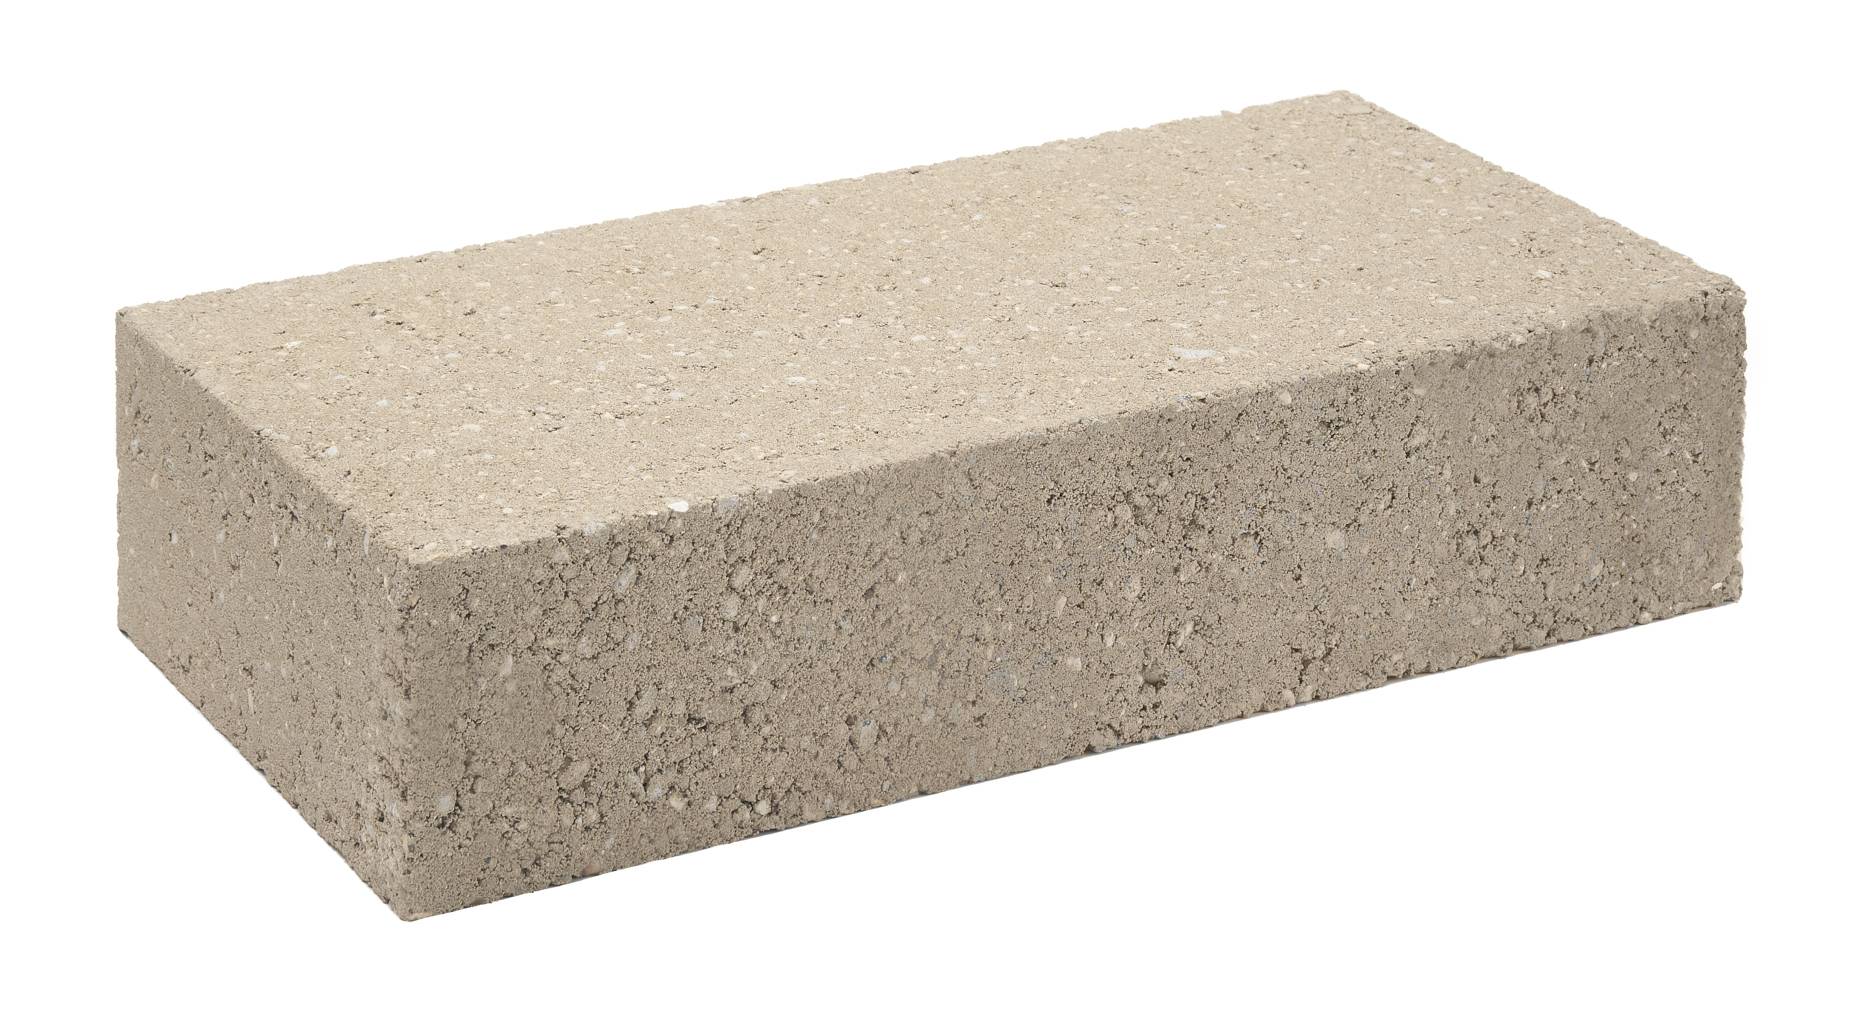 Lignacrete 140 mm Solid 17.5 N Concrete Blocks - High Density Robust Loadbearing Units